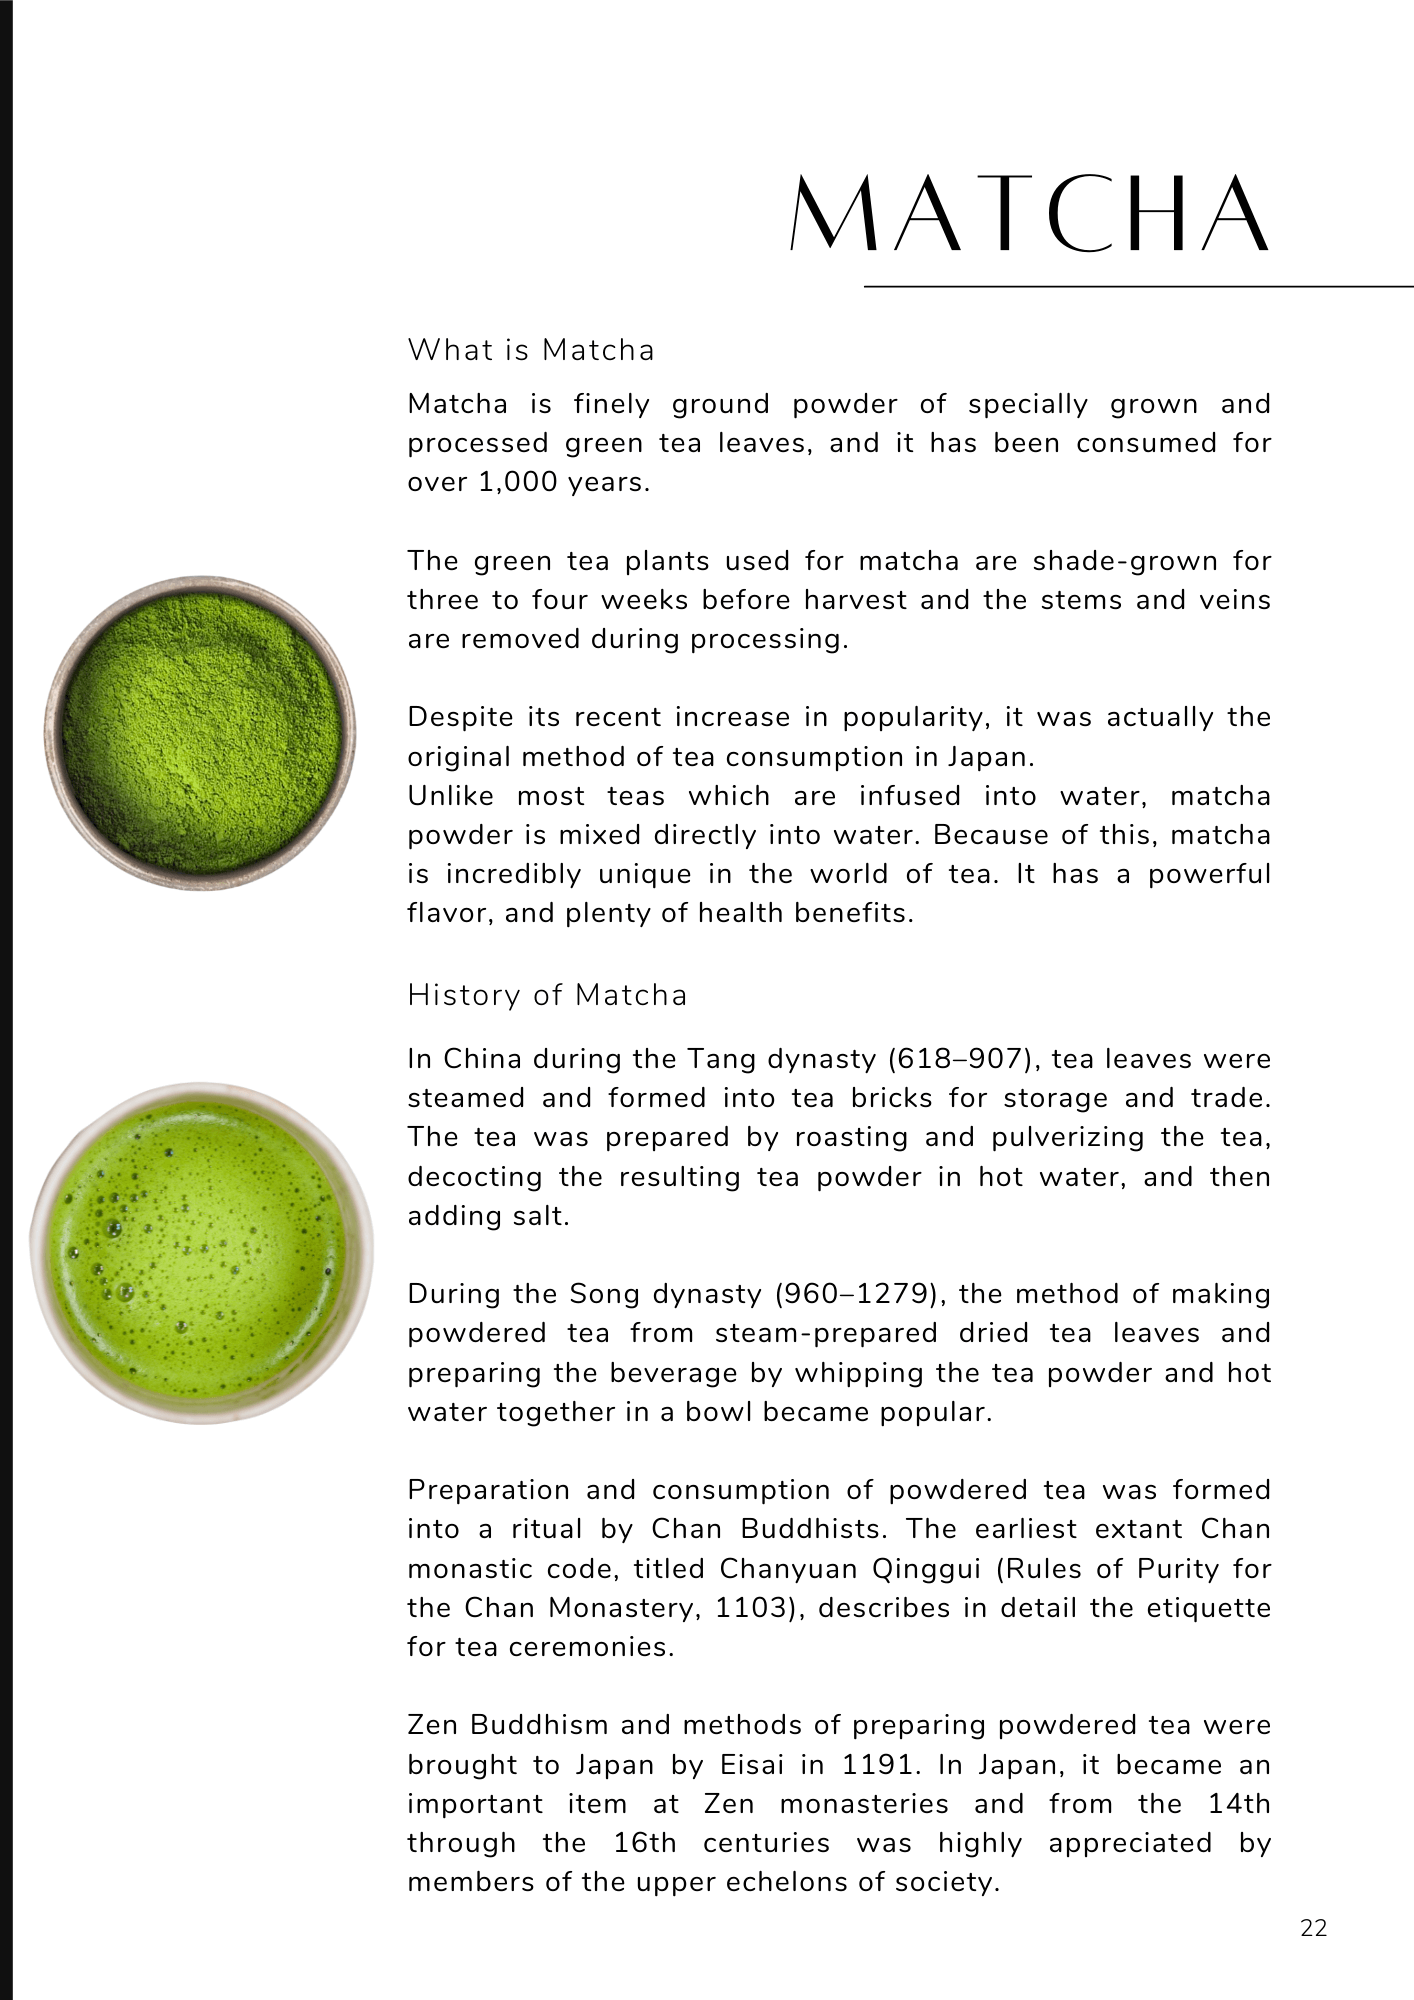 Secrets of Japanese Green Tea: the ultimate Japanese Tea Book